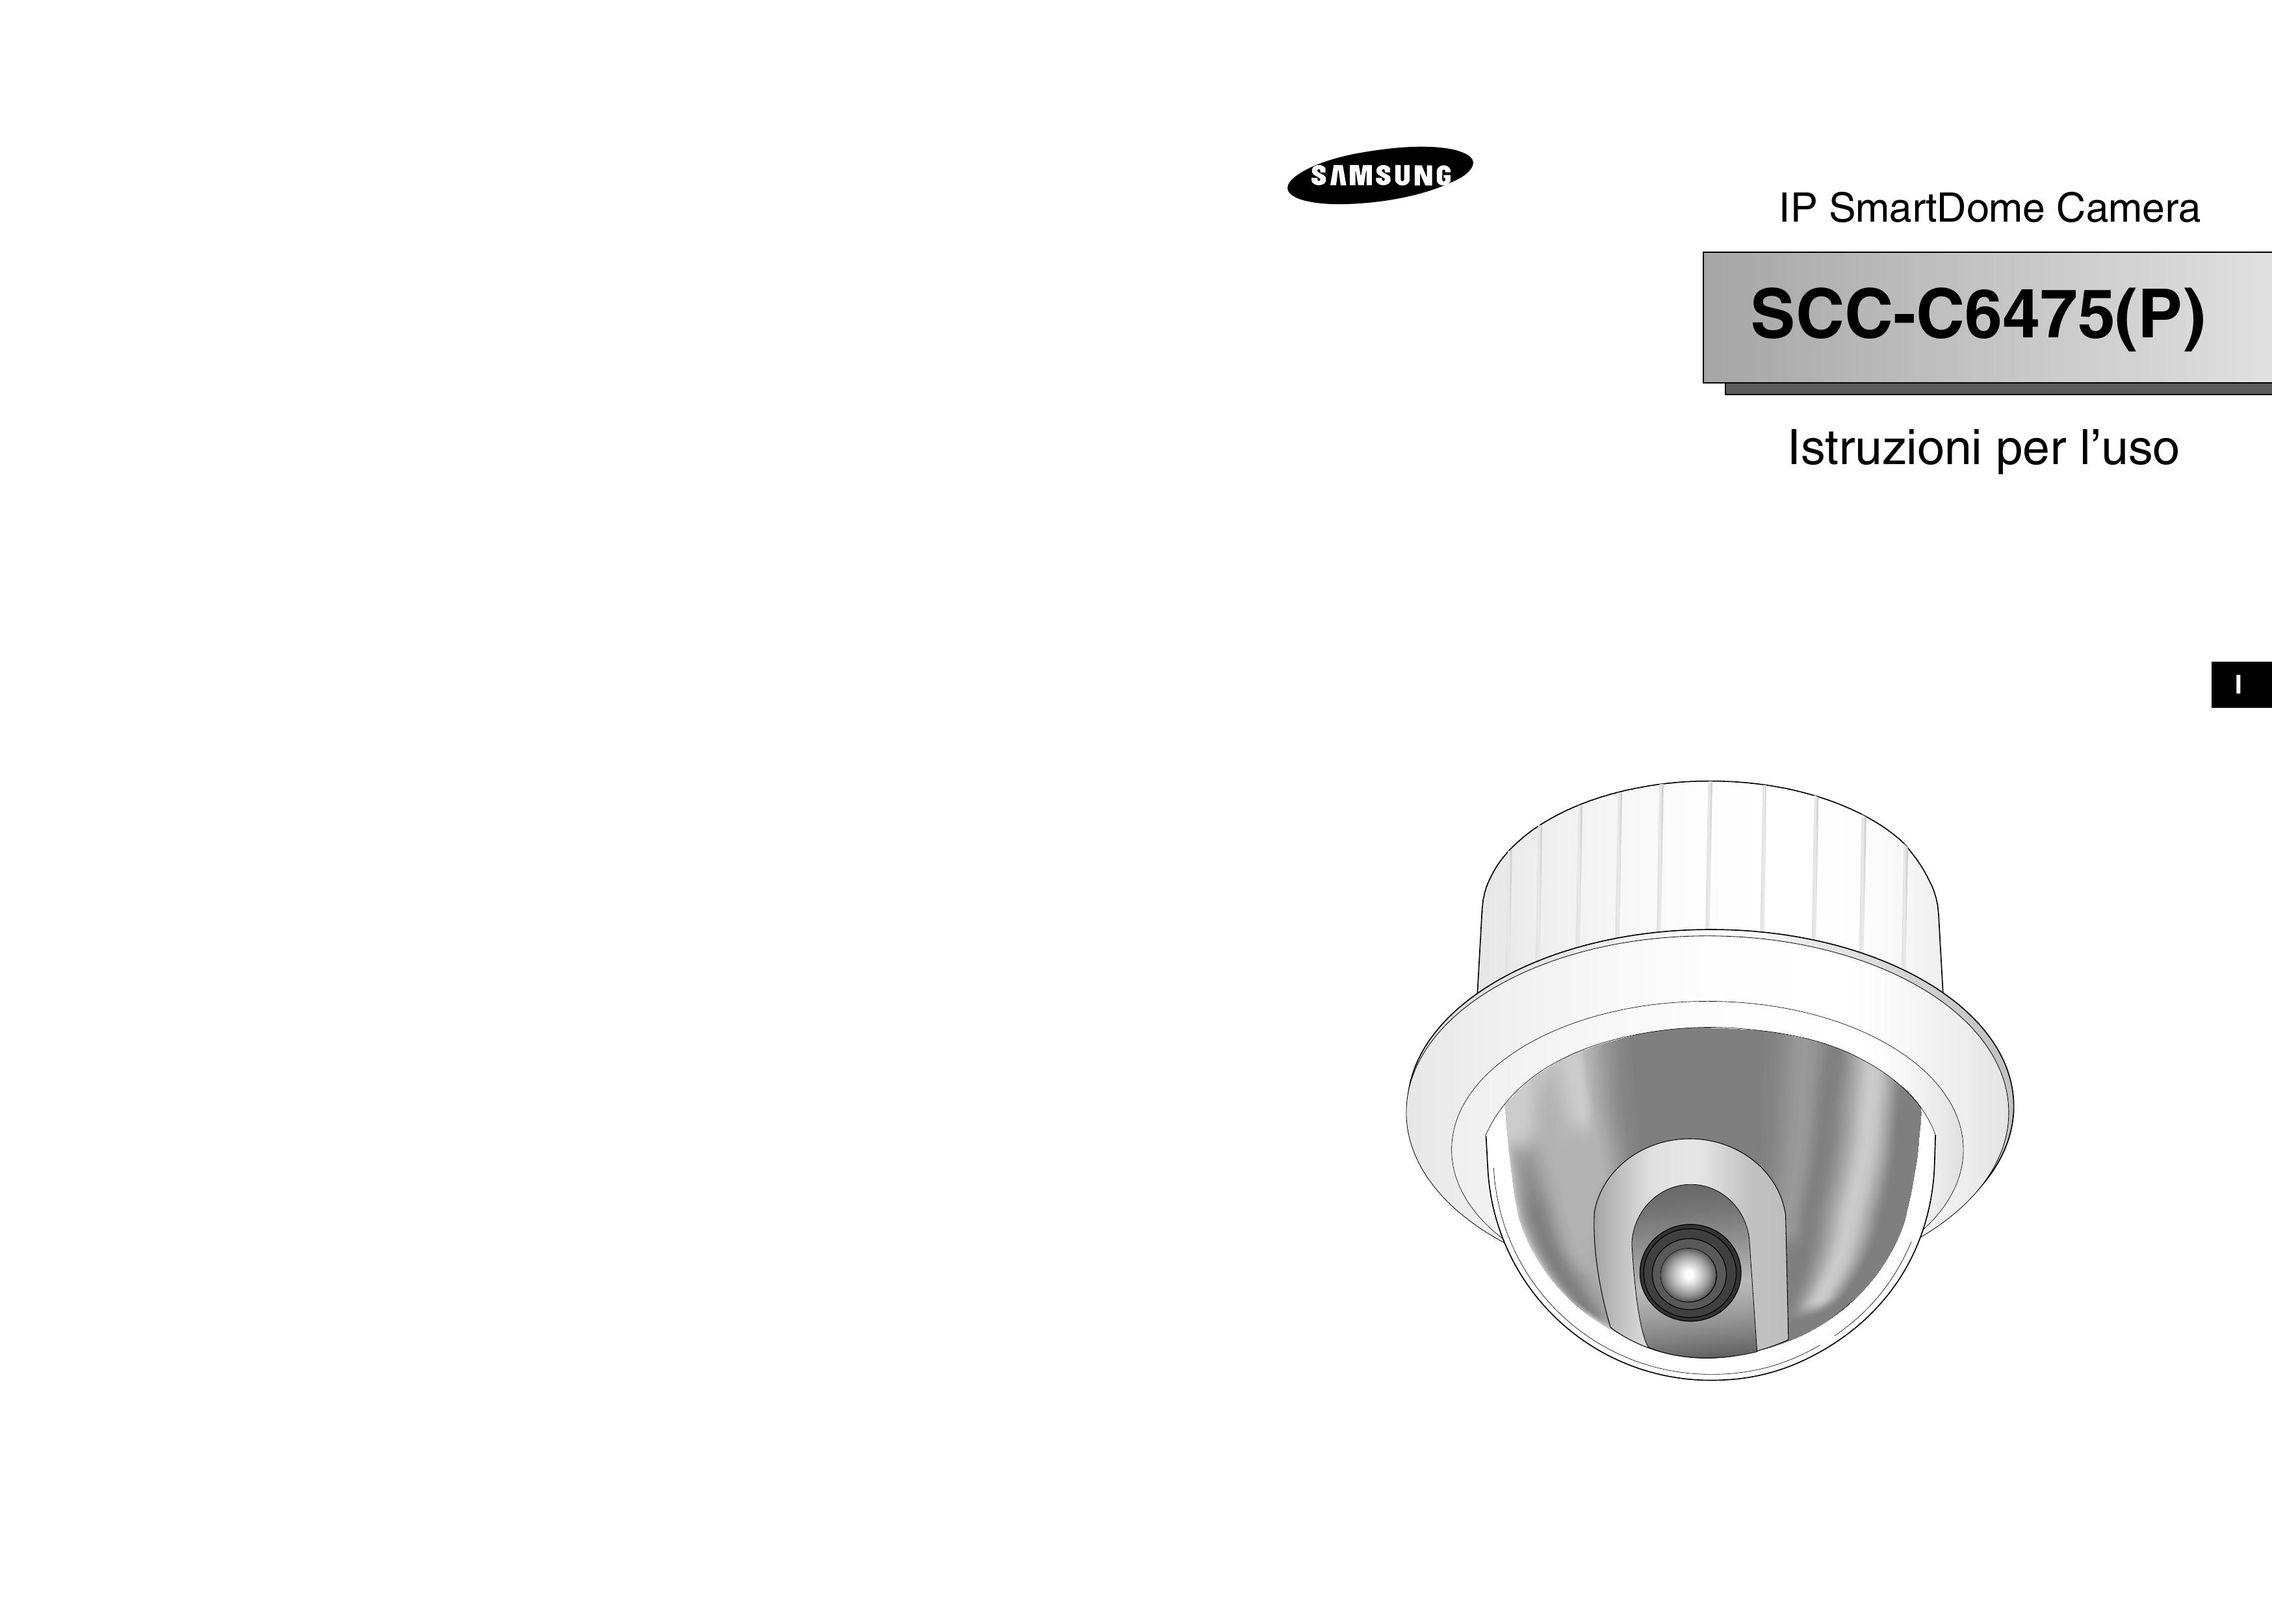 Samsung Scc-C6475 Home Security System User Manual